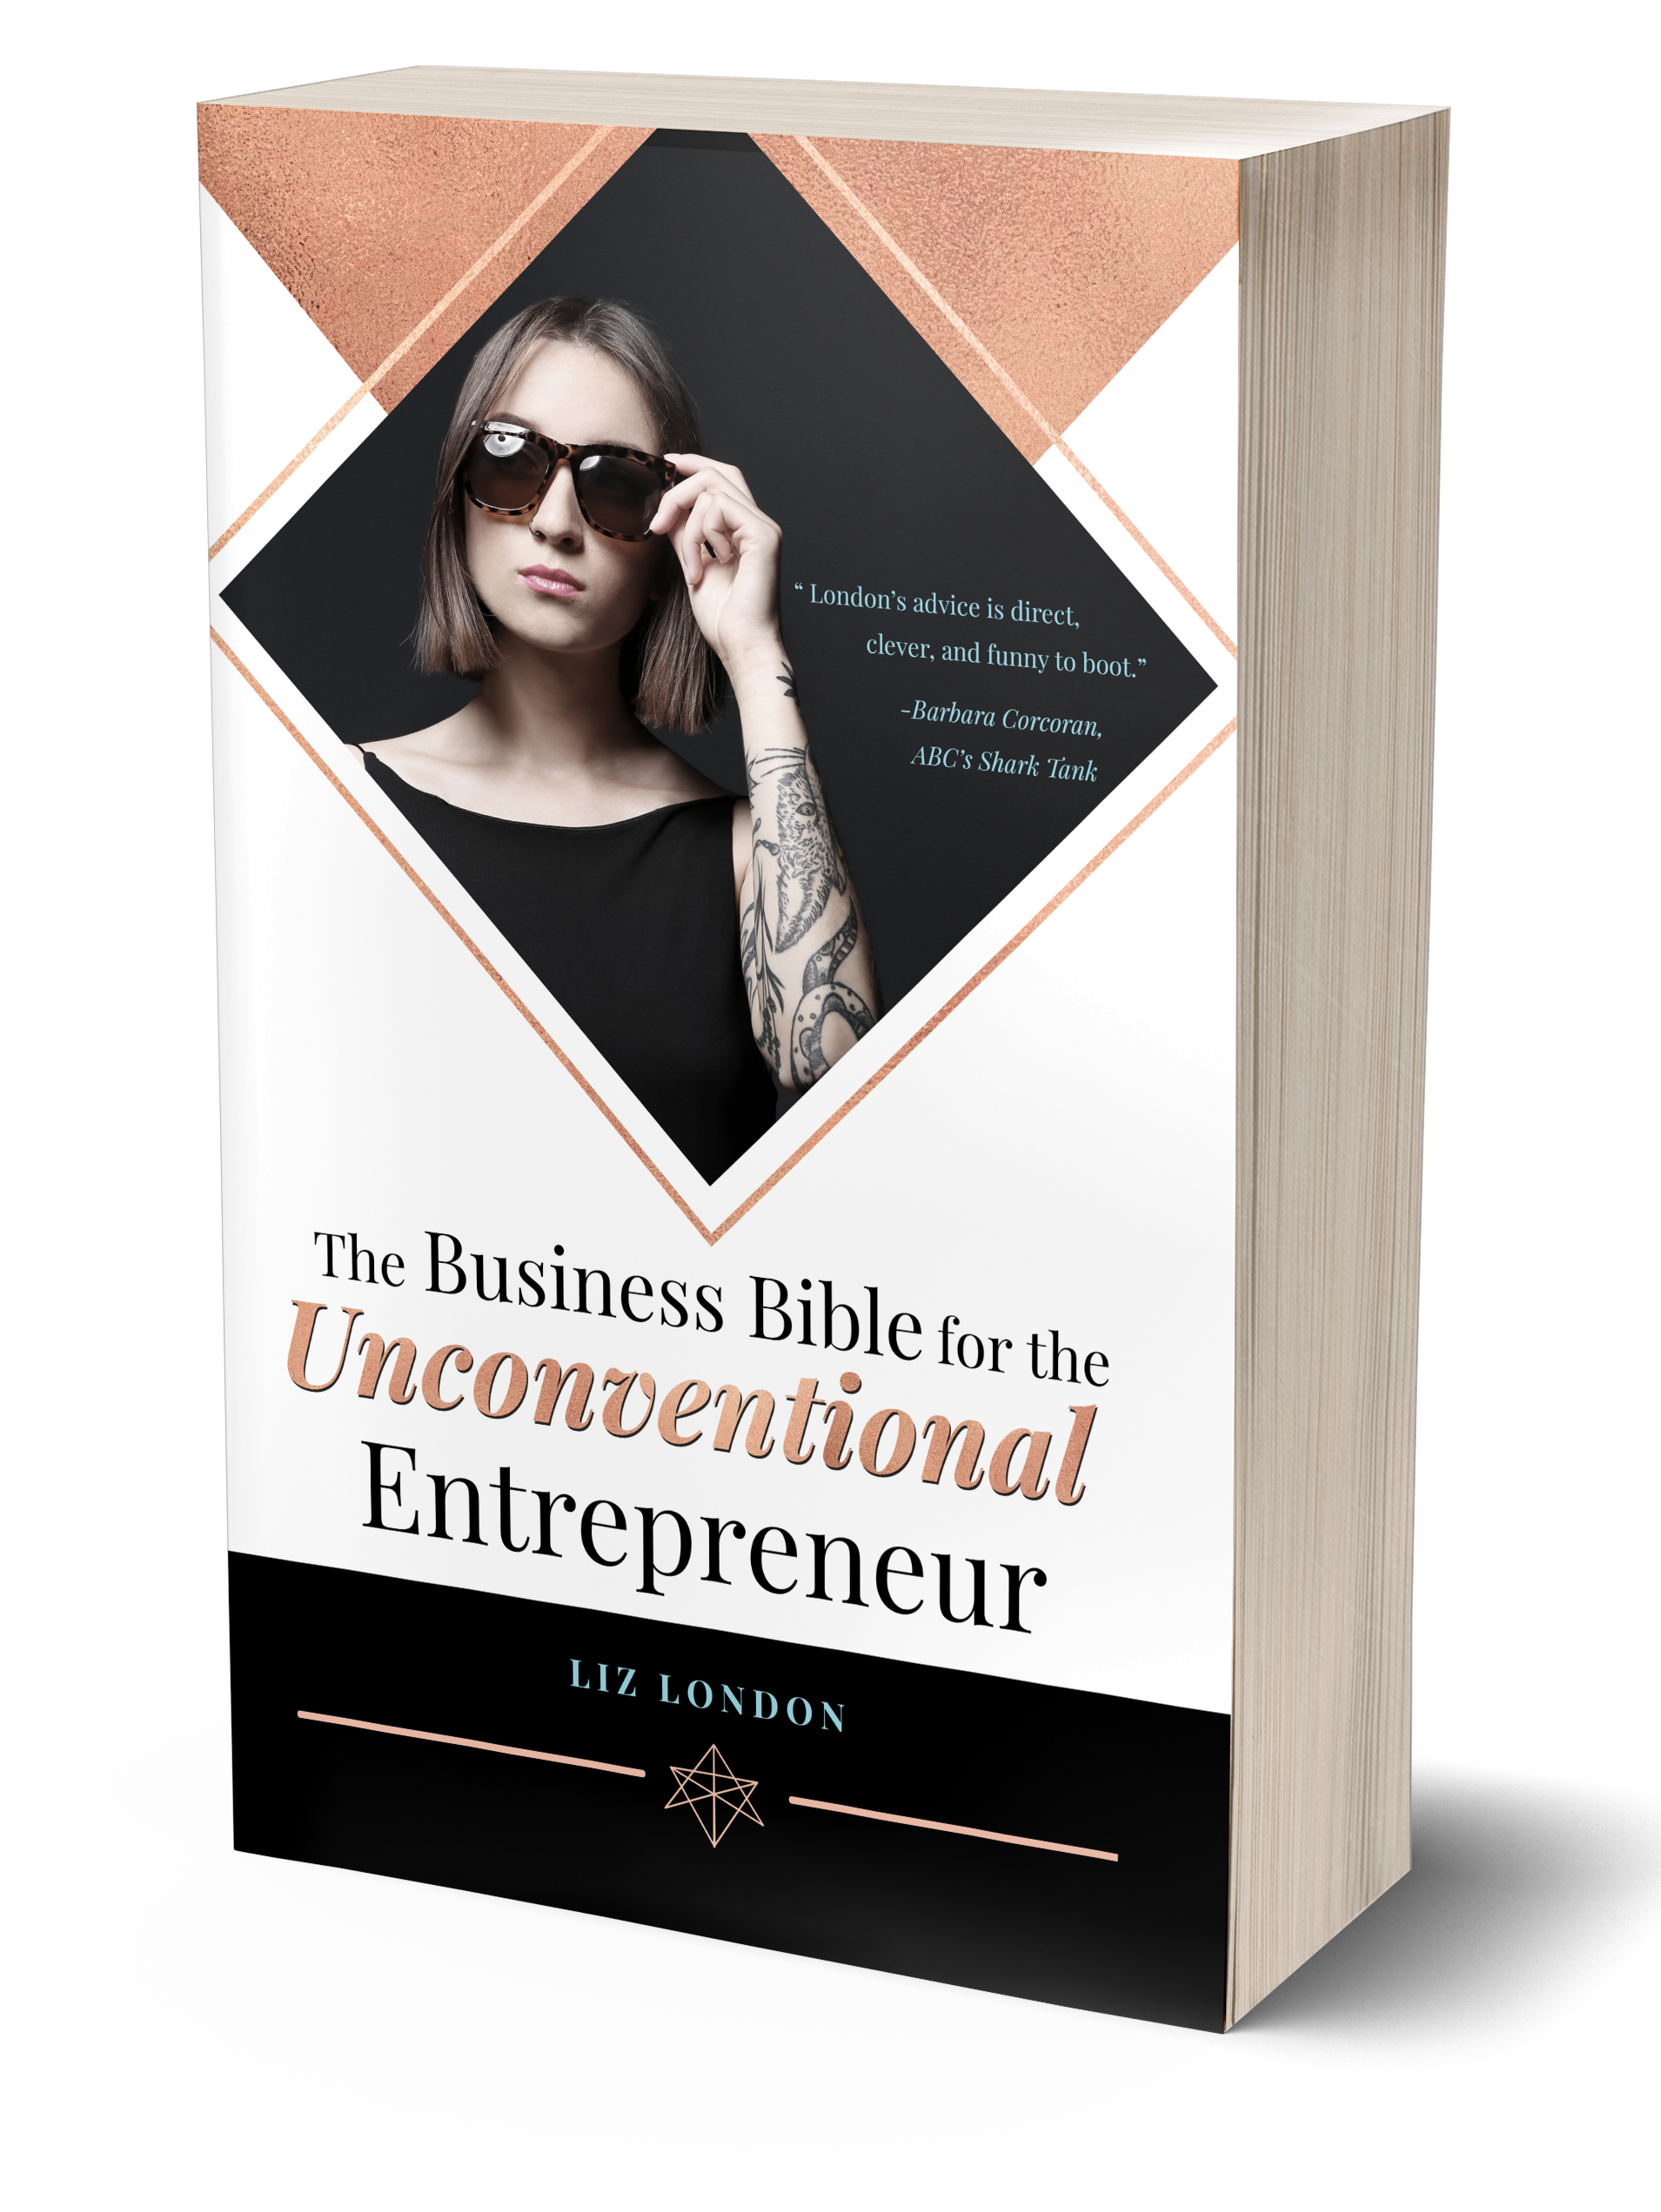 The Unconventional Entrepreneur book by Liz London